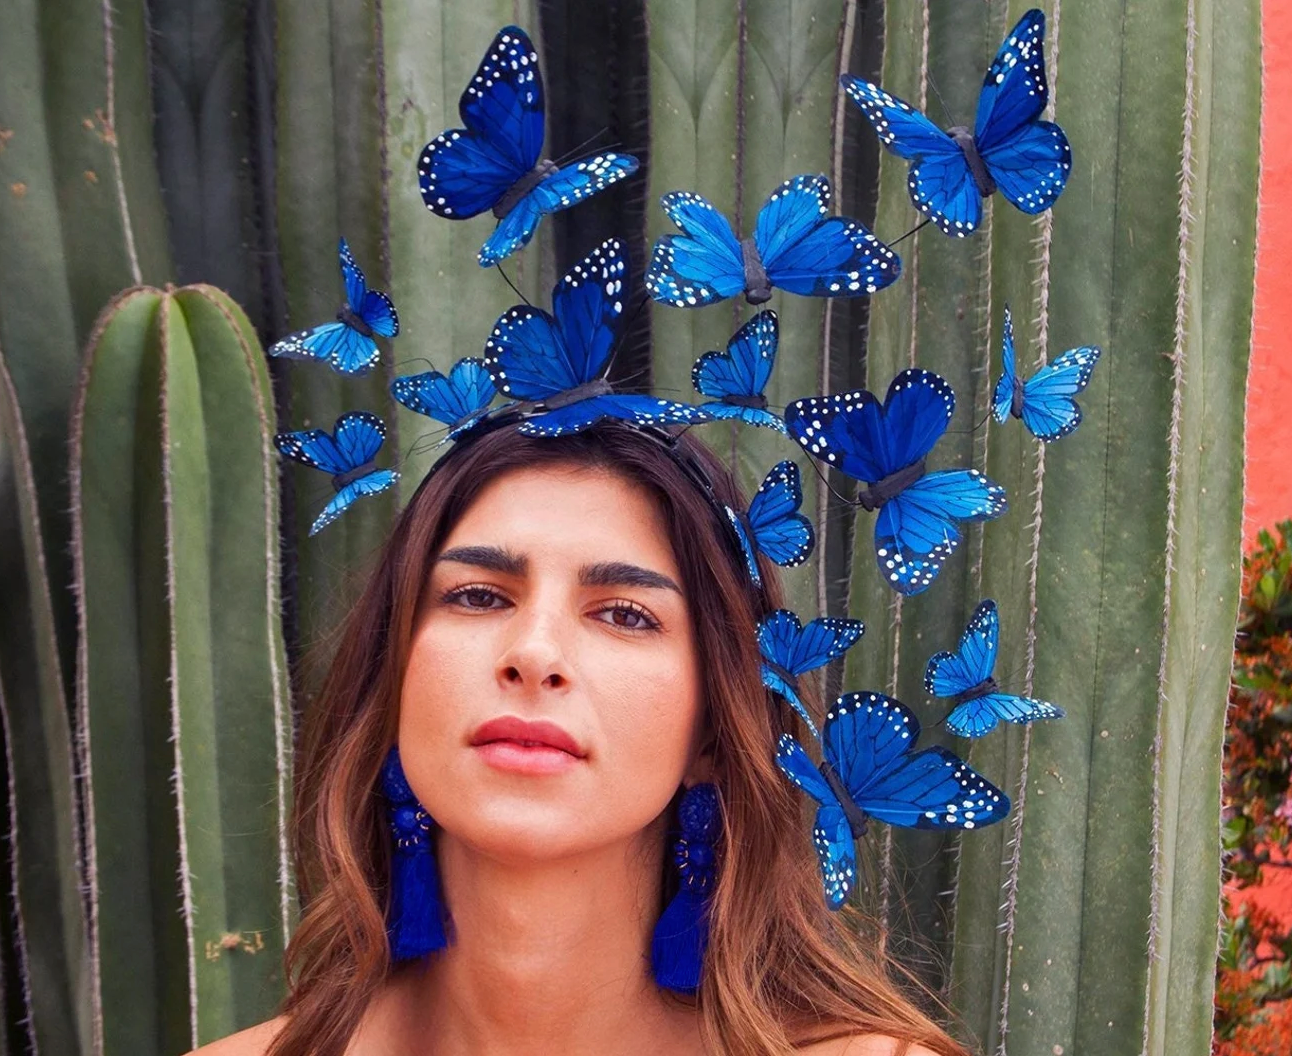 Wild Blue Yonder Butterfly Fascinator